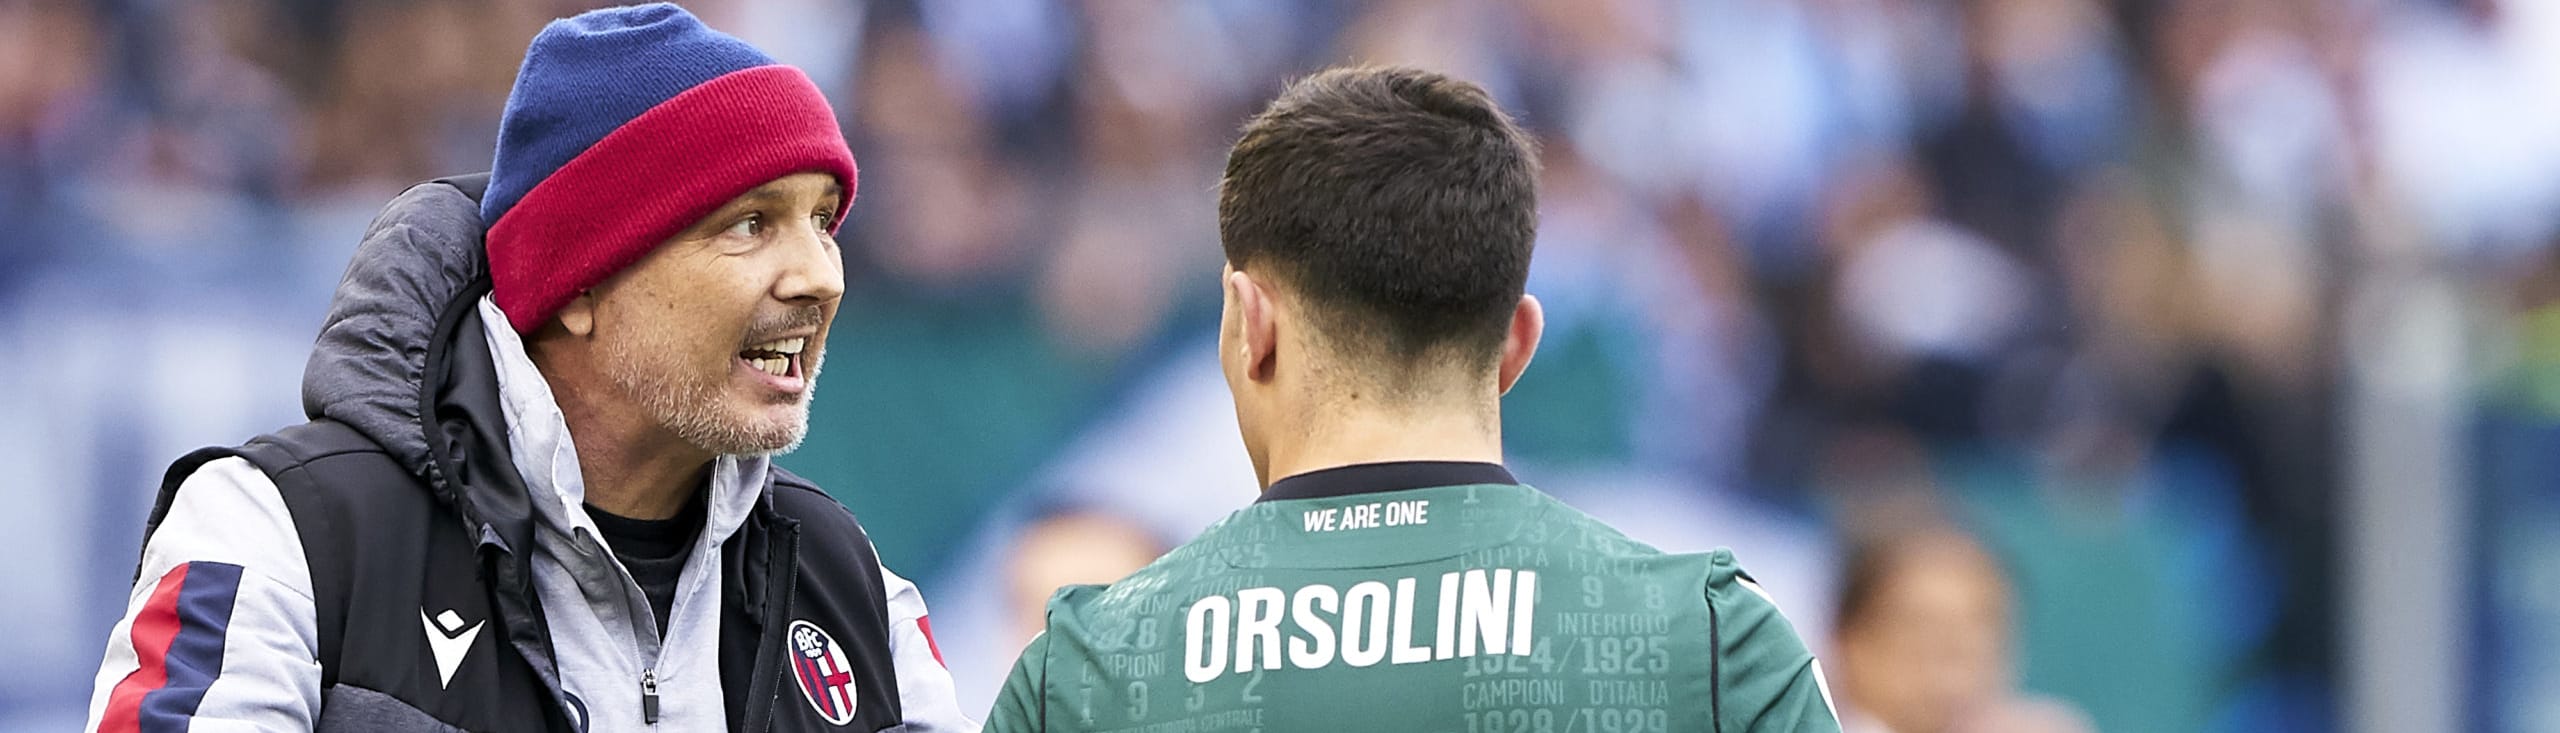 Pronostico Bologna-Juventus, Mihajlovic pensa al tridente per sorprendere i bianconeri